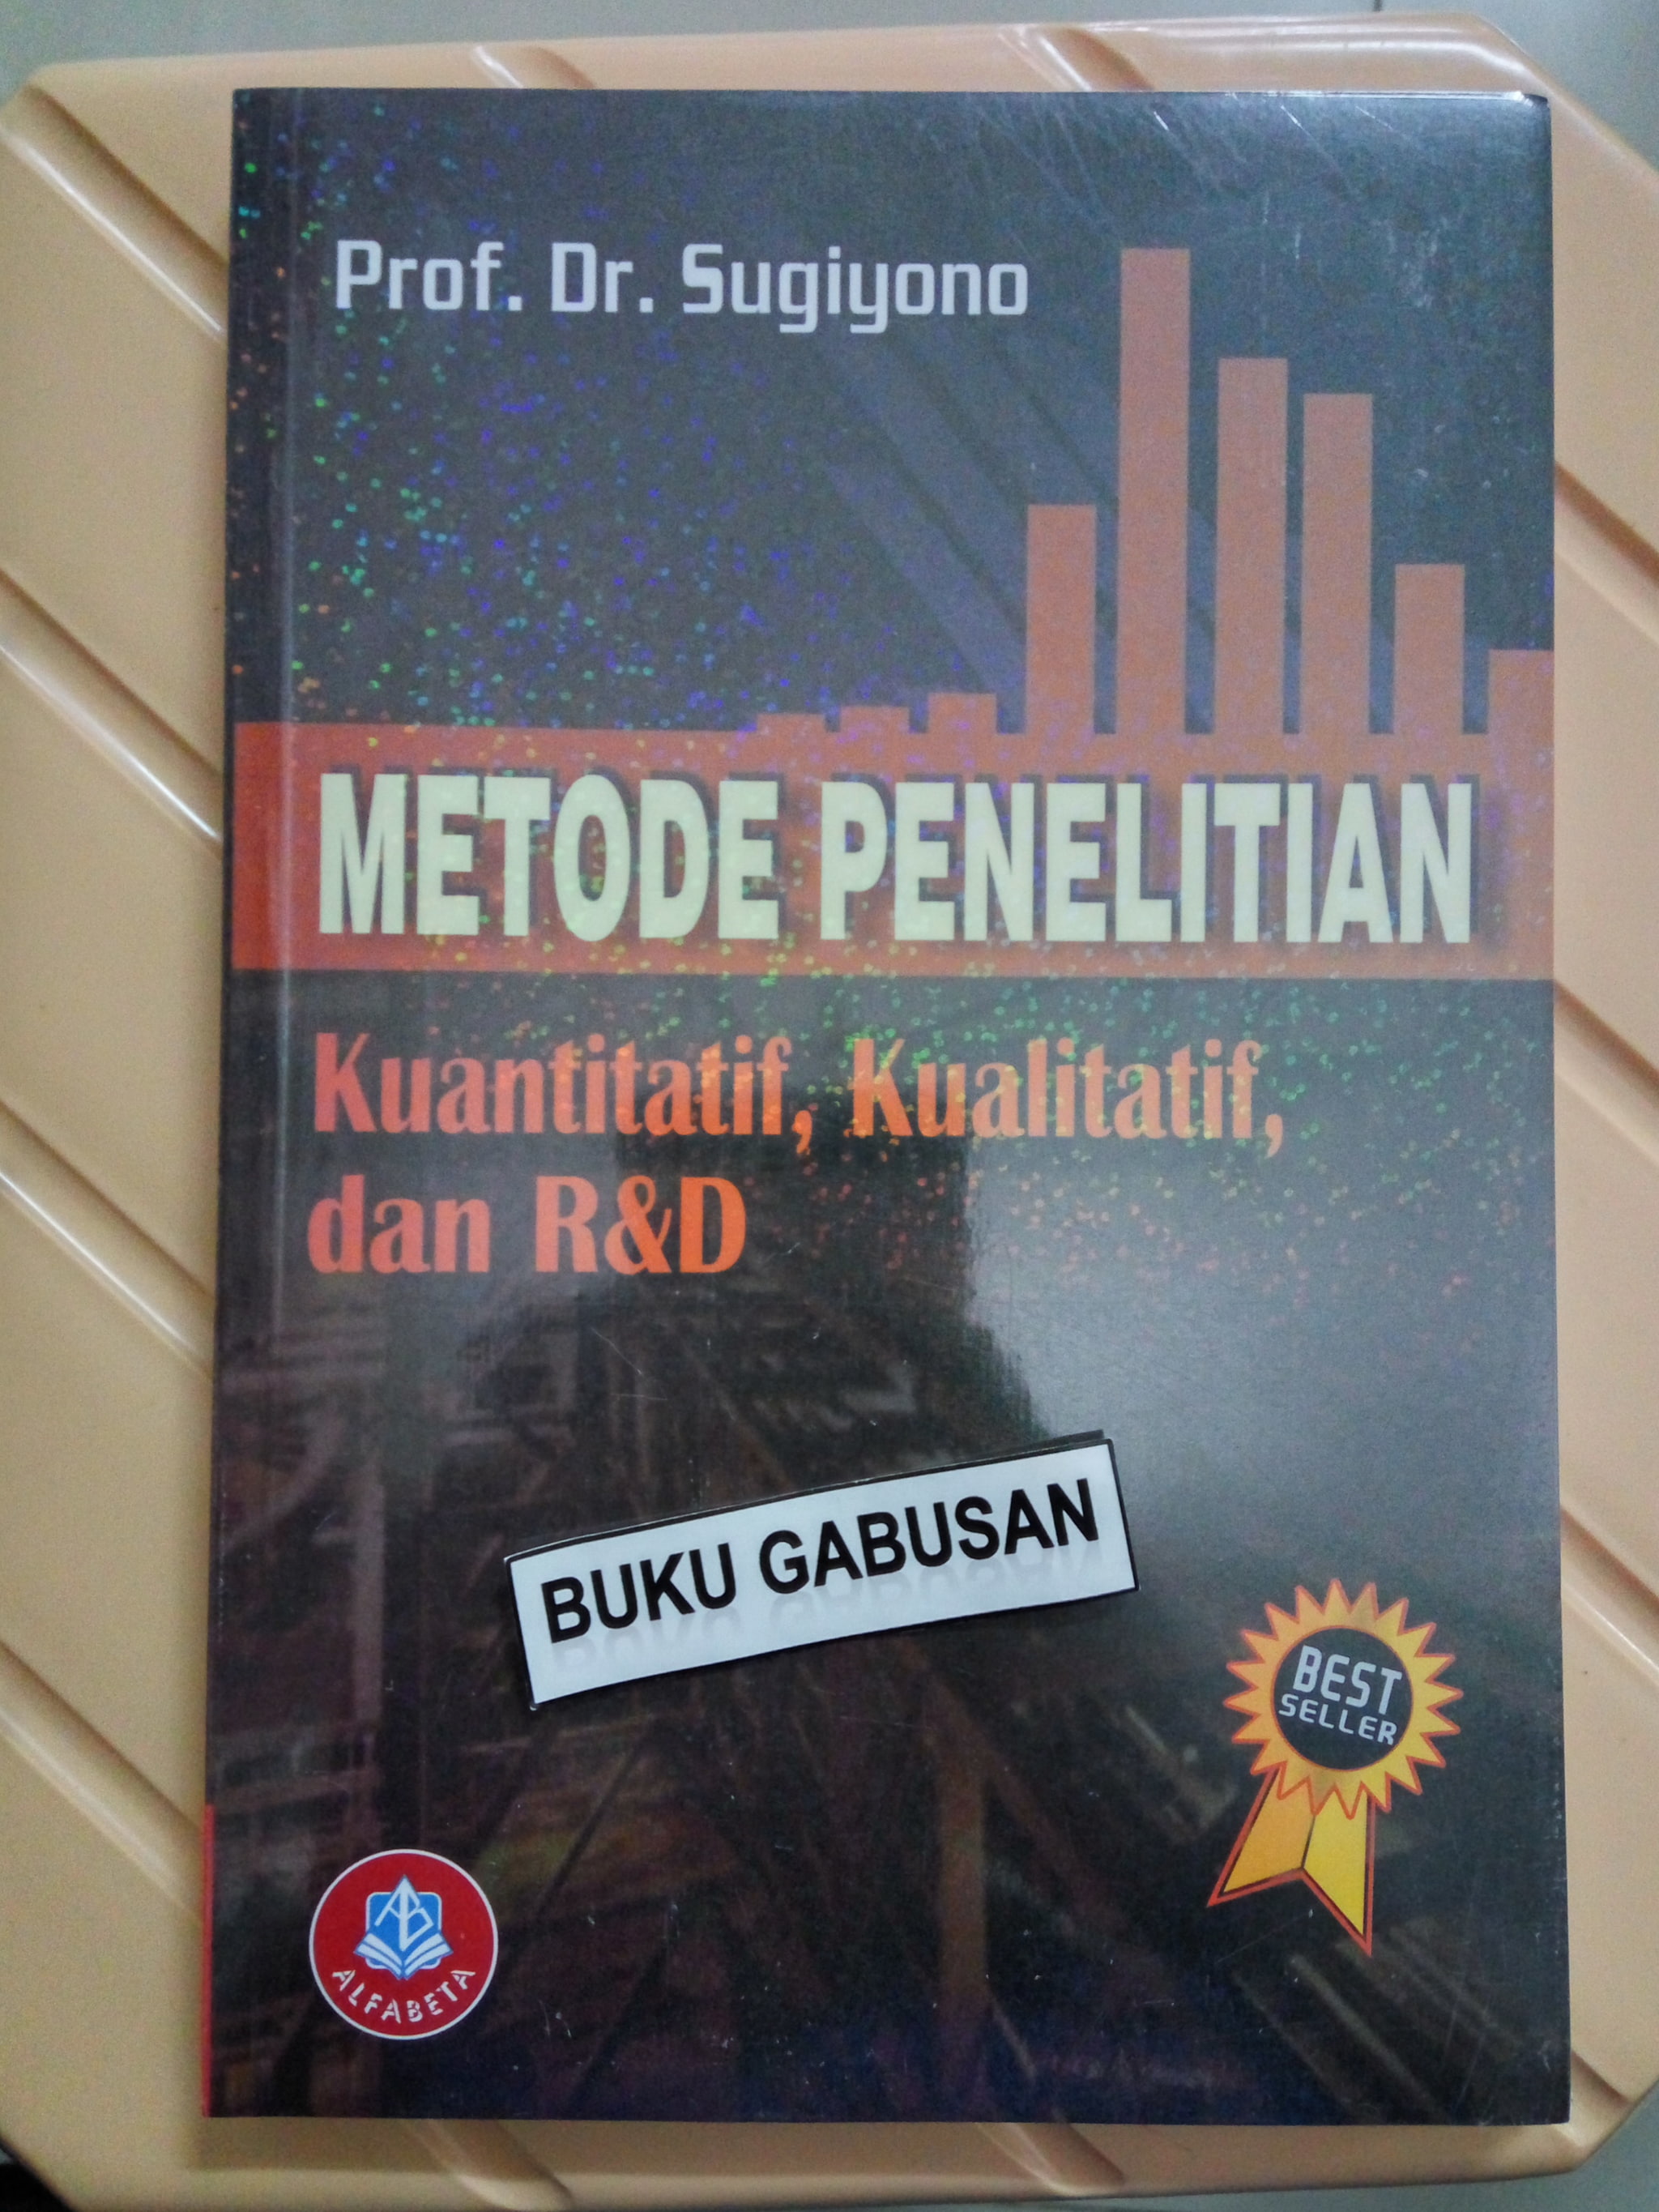 download buku metode penelitian sugiyono 2012